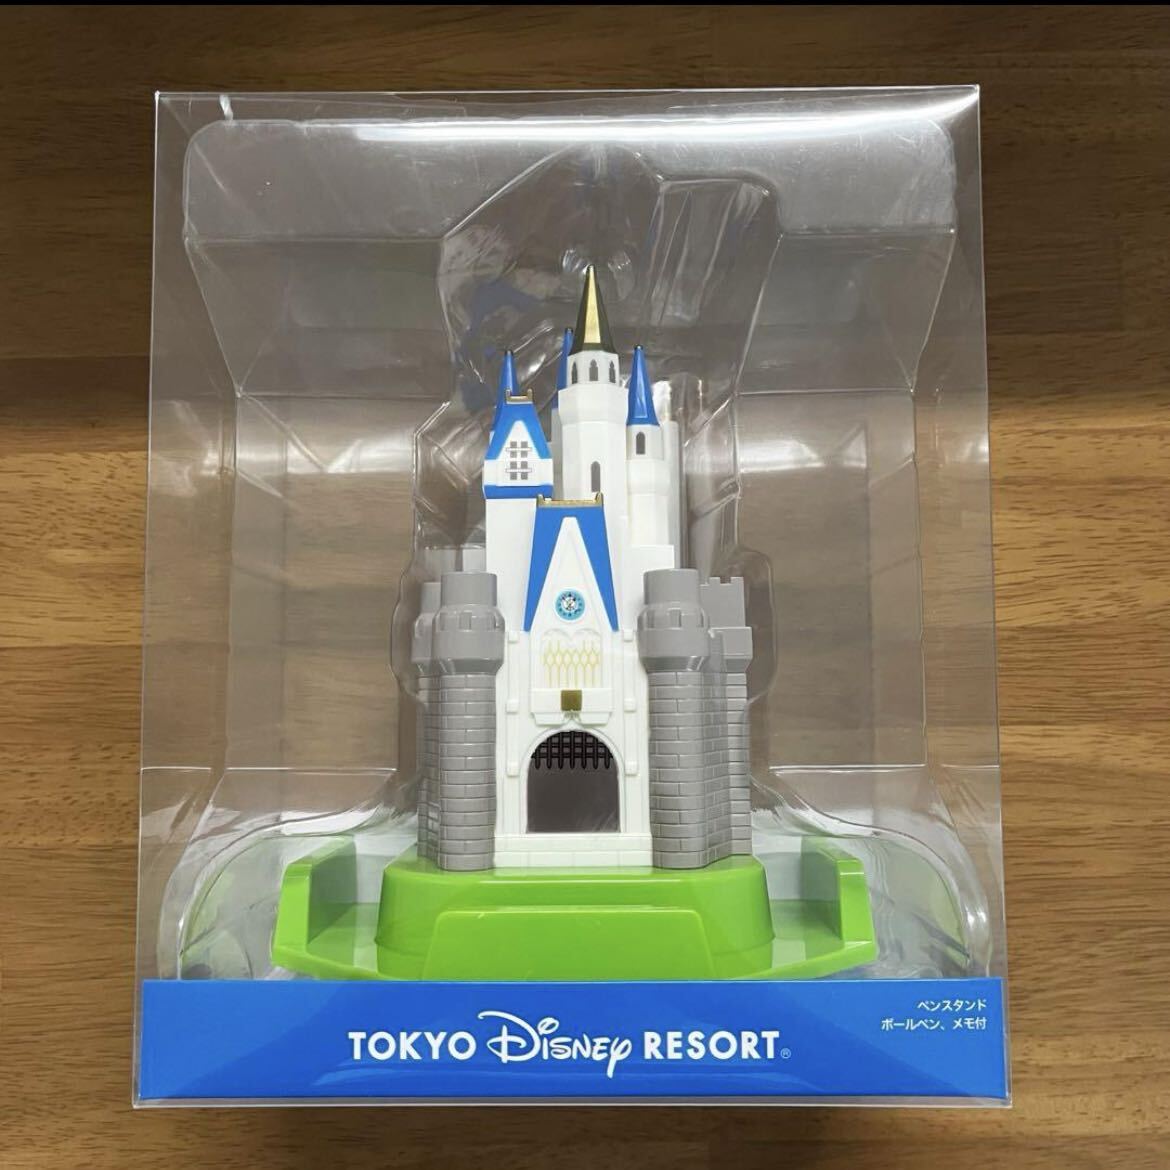 1 jpy start Tokyo Disney resort sinterela castle pen stand ballpen * memory attaching 